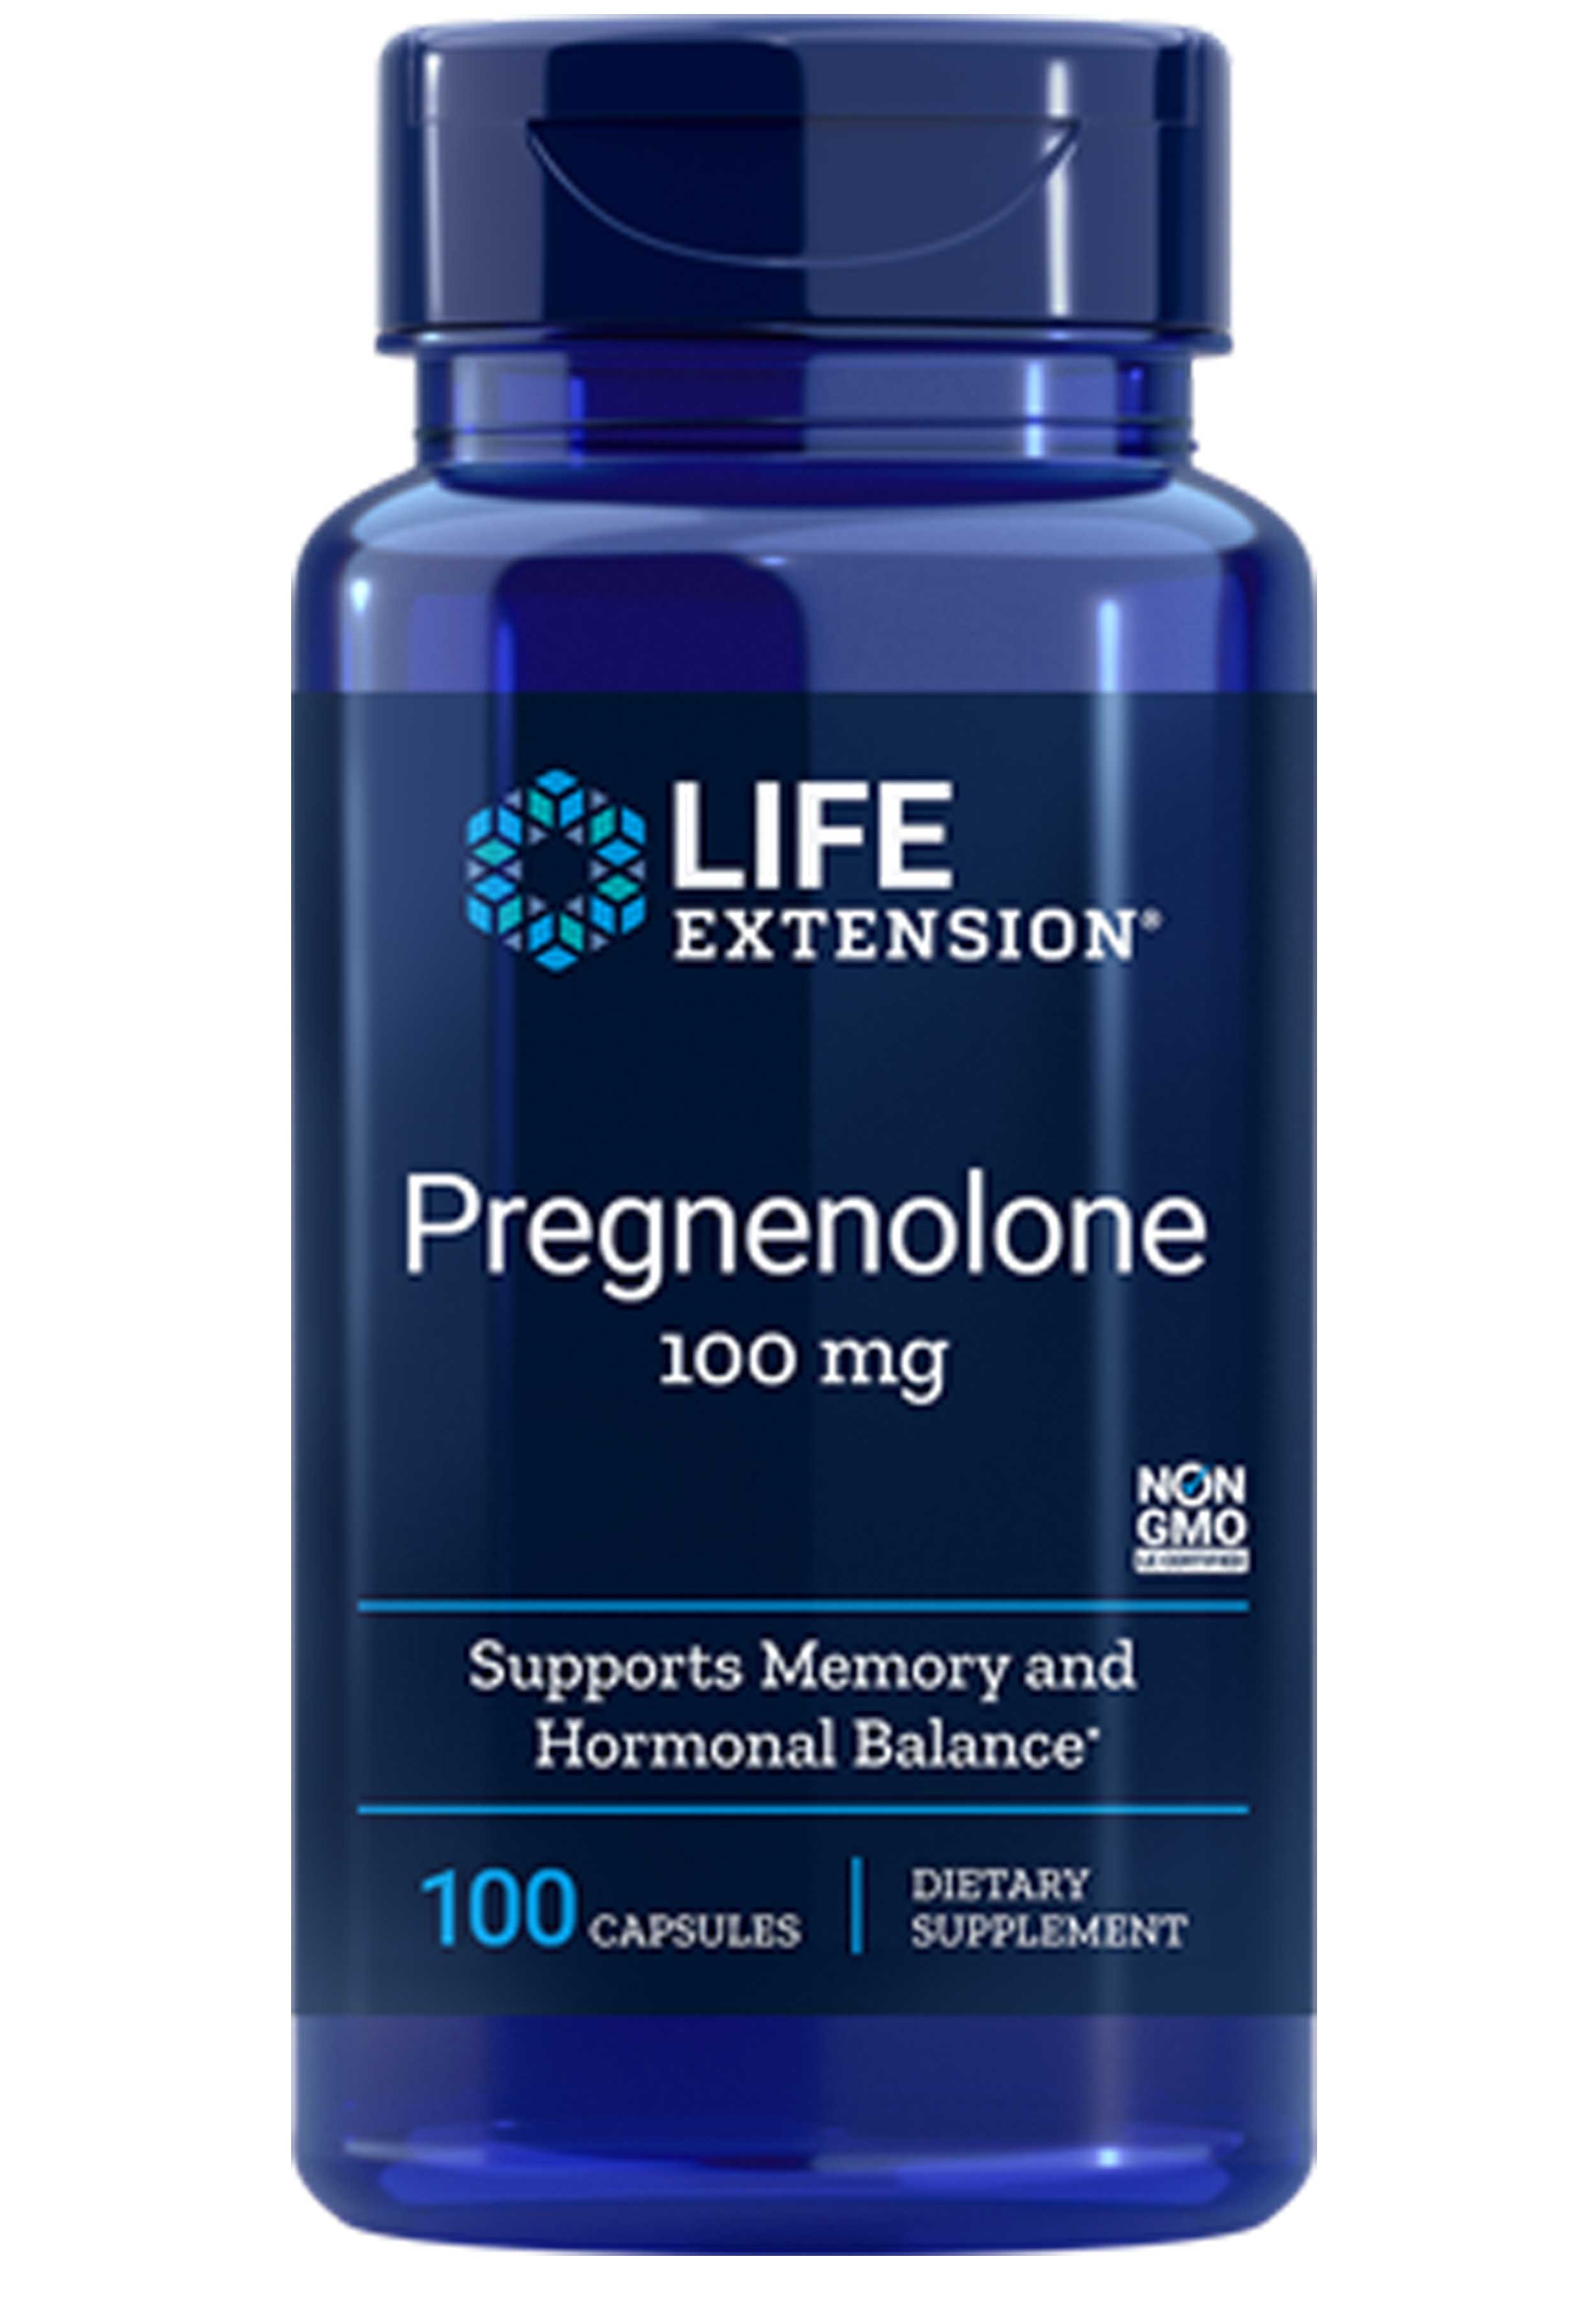 Life Extension Pregnenolone